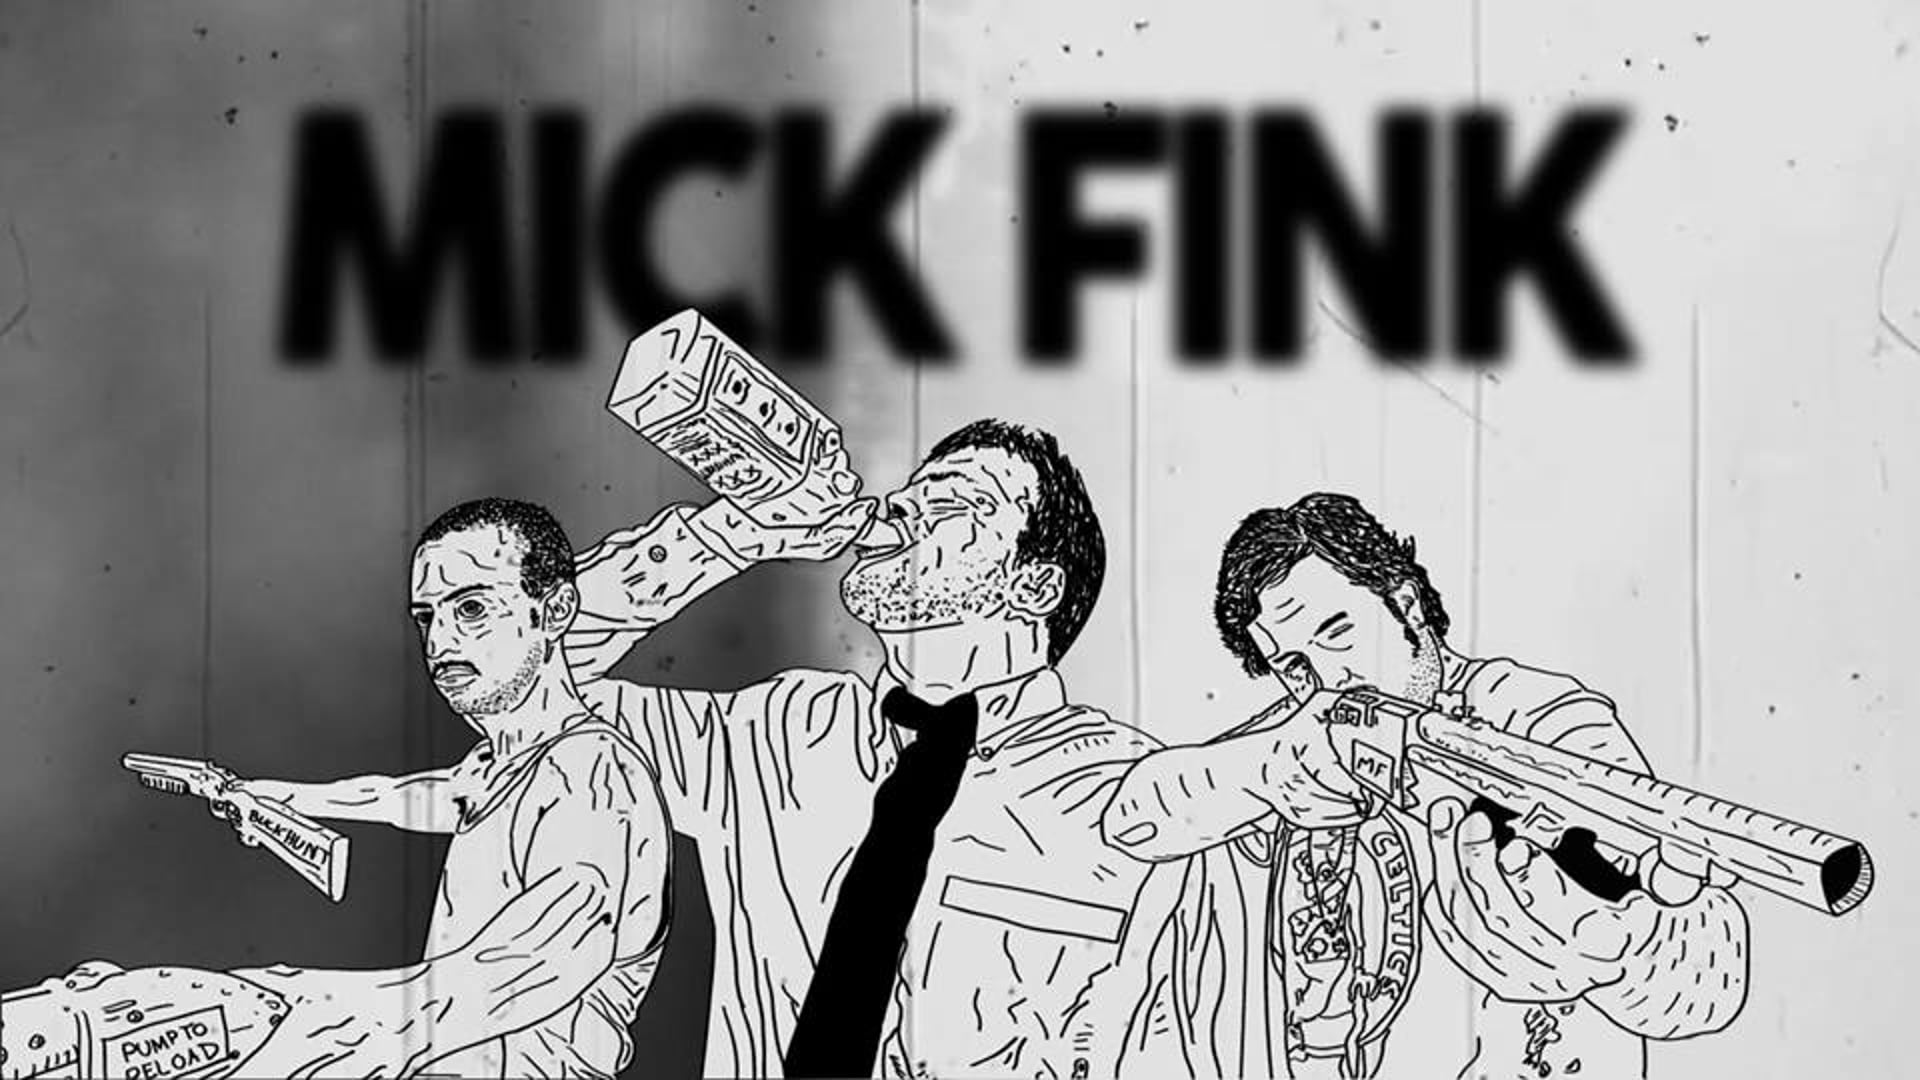 Mick Fink